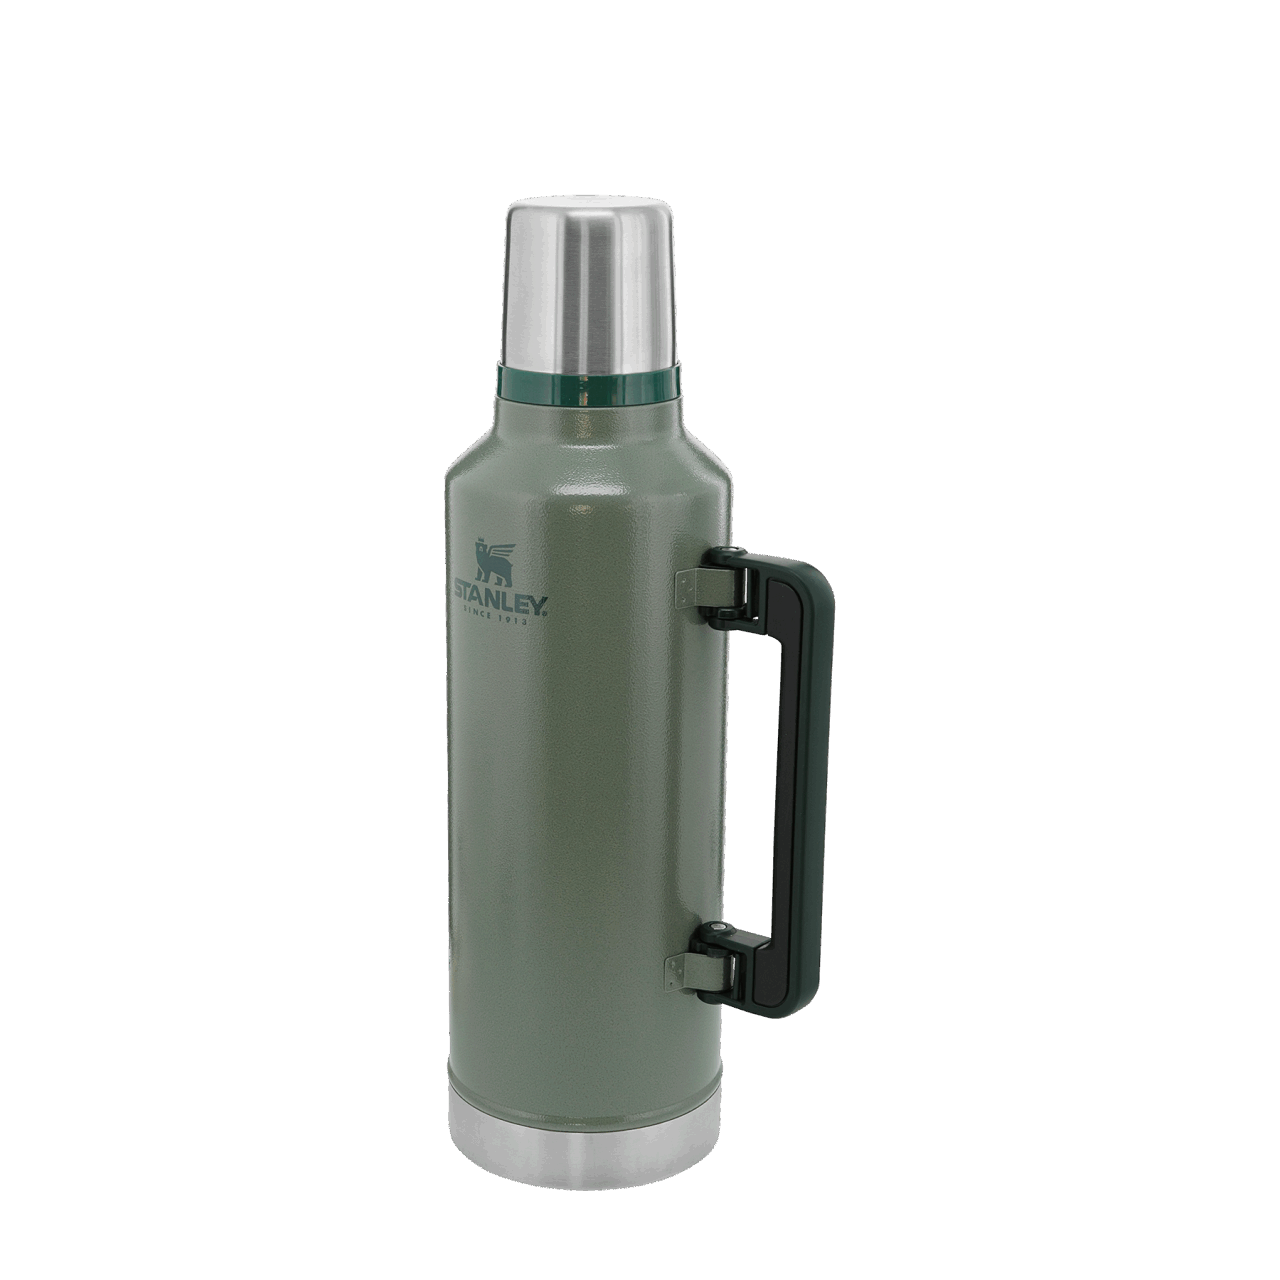 Stanley Vacuum Bottle 1,0 L - Hammertone